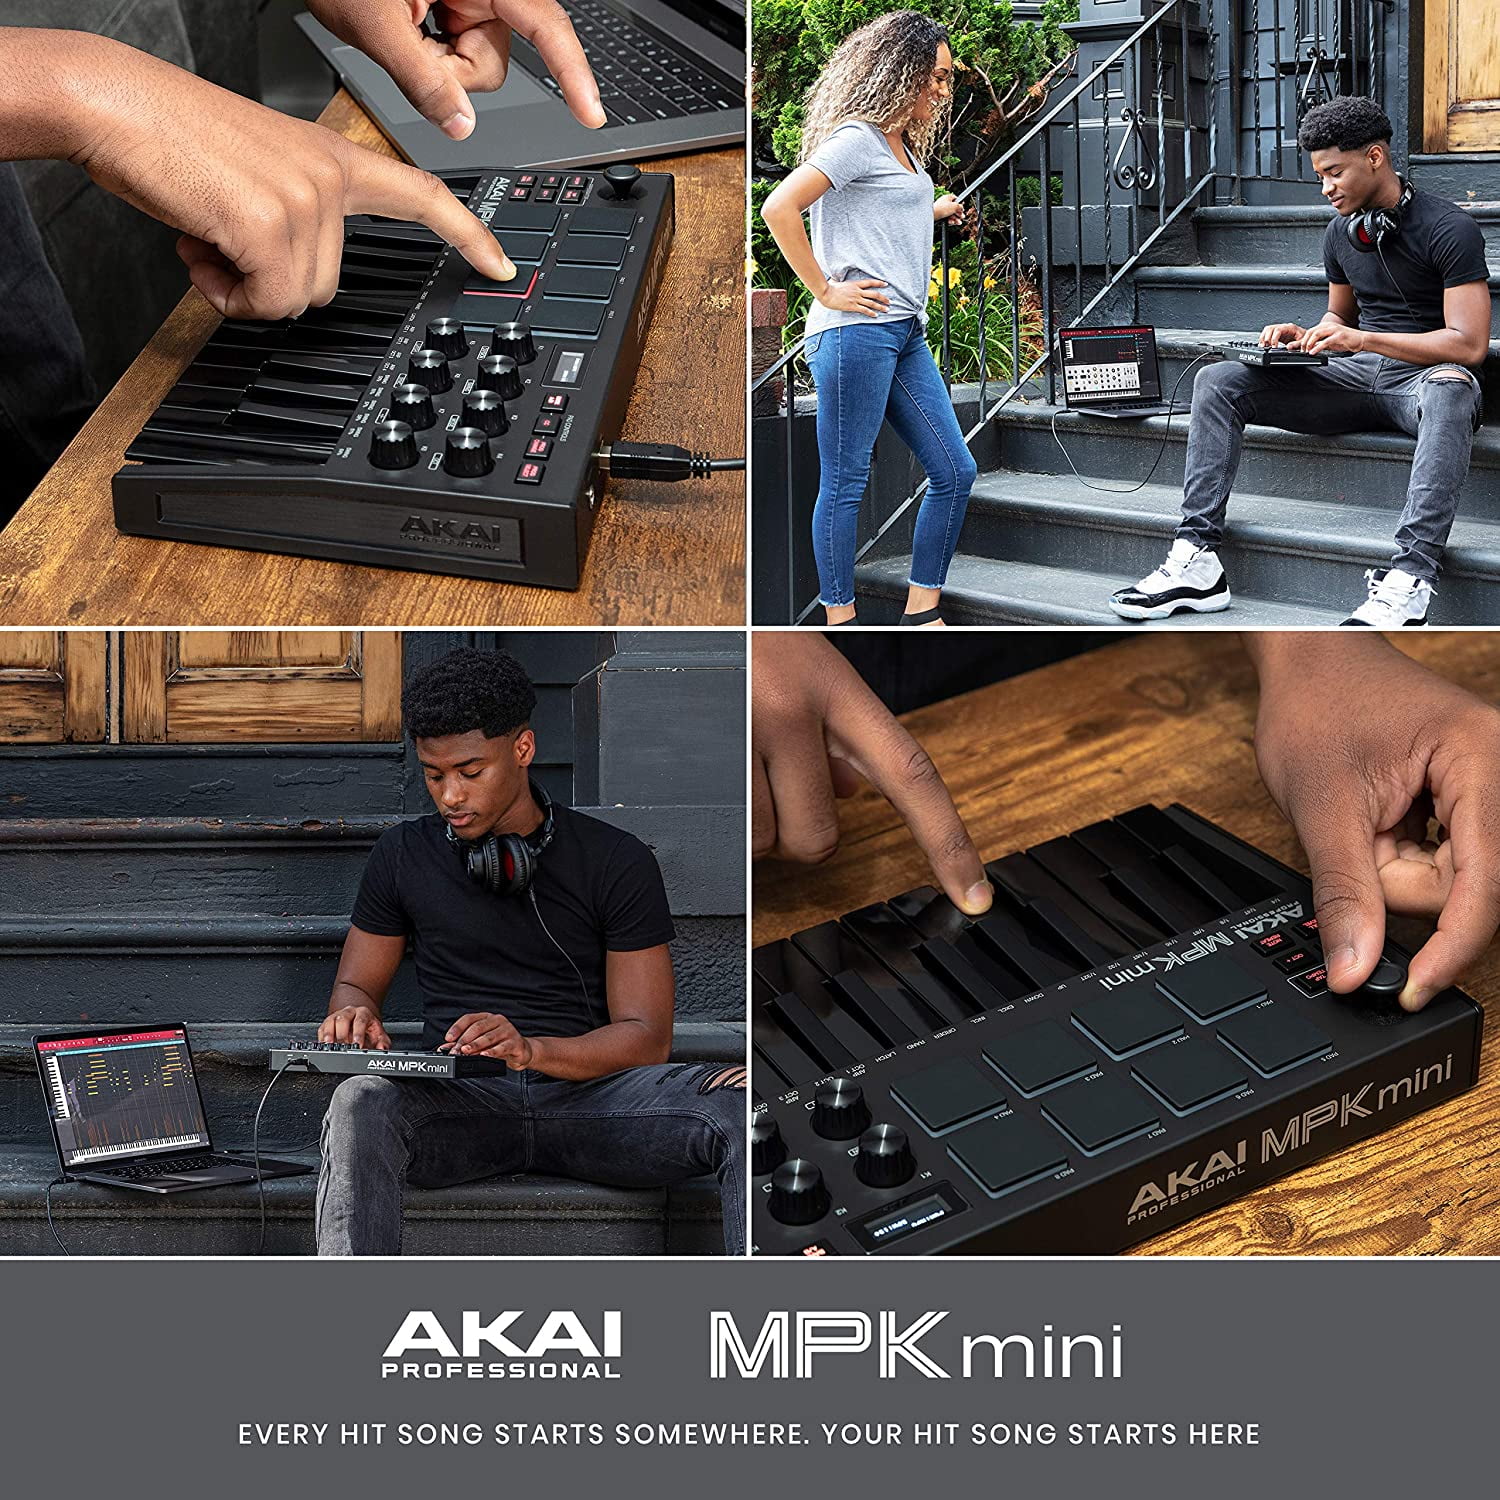 Akai professional MPK Mini MK3 - 25 key ultra portable USB MIDI